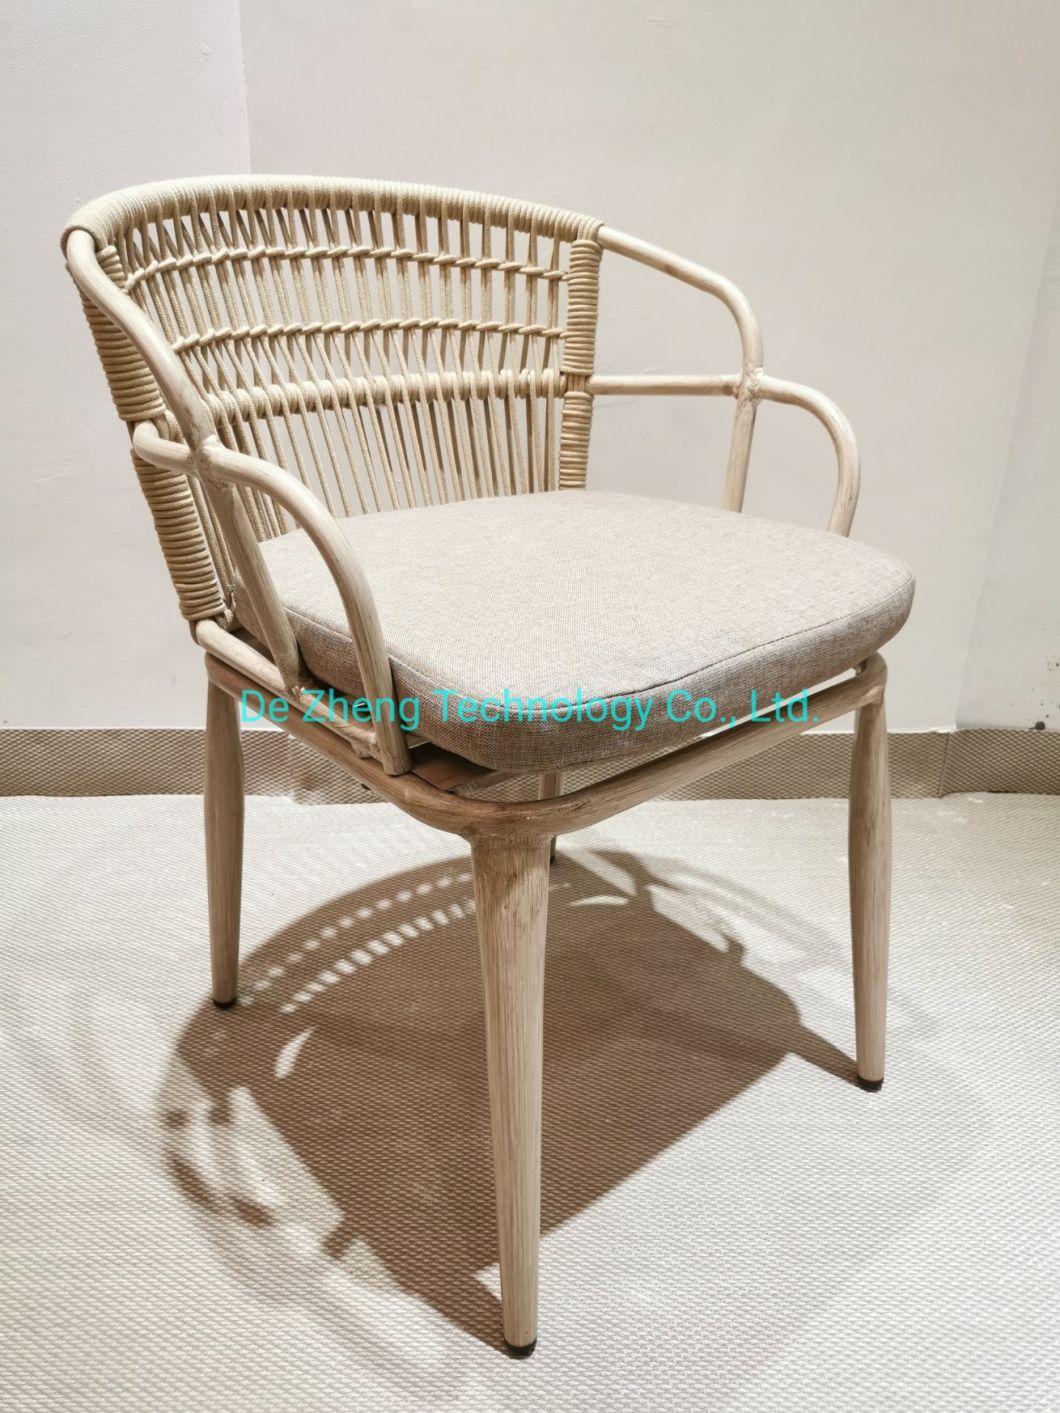 2021 Environmental Design Aluminum Outdoor Furniture Outdoor Chair Garden Durable Dining Chair for Outdoor